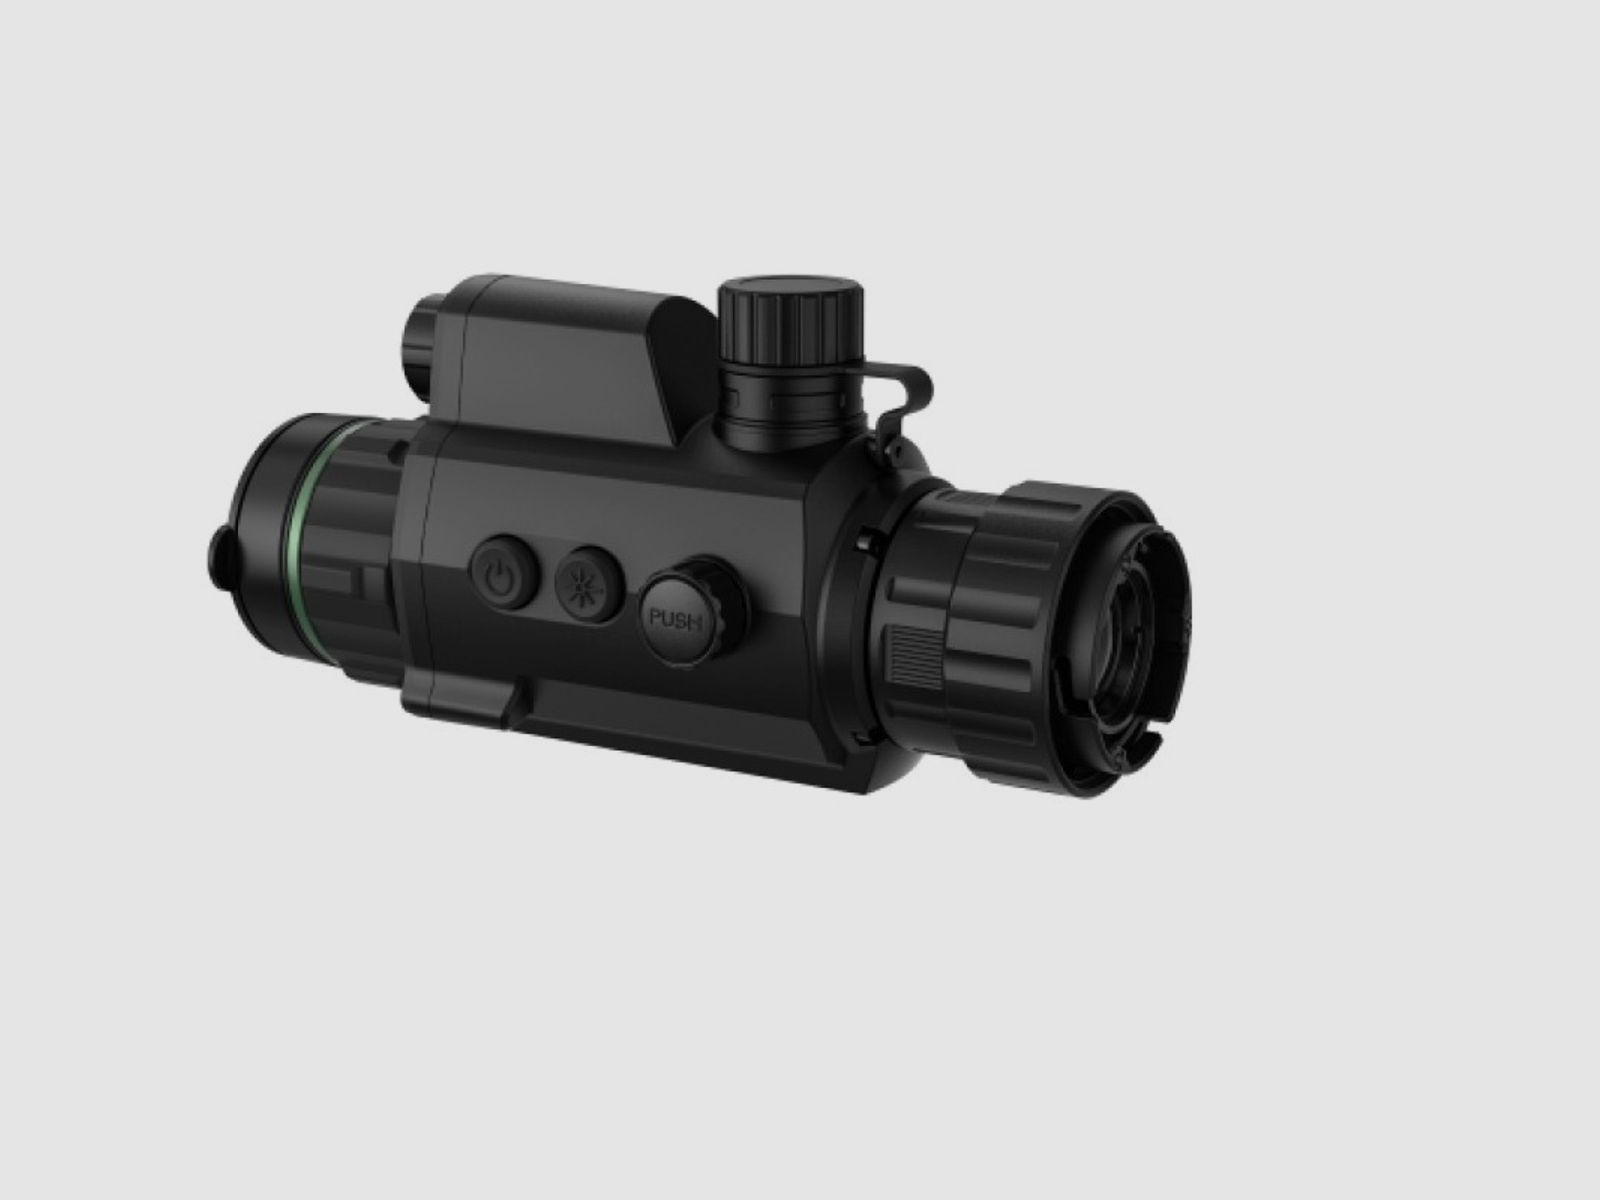 Hikmicro Clip-On Cheetah C32F-N 940 nm Nachtsichtgerät / Vorsatzgerät